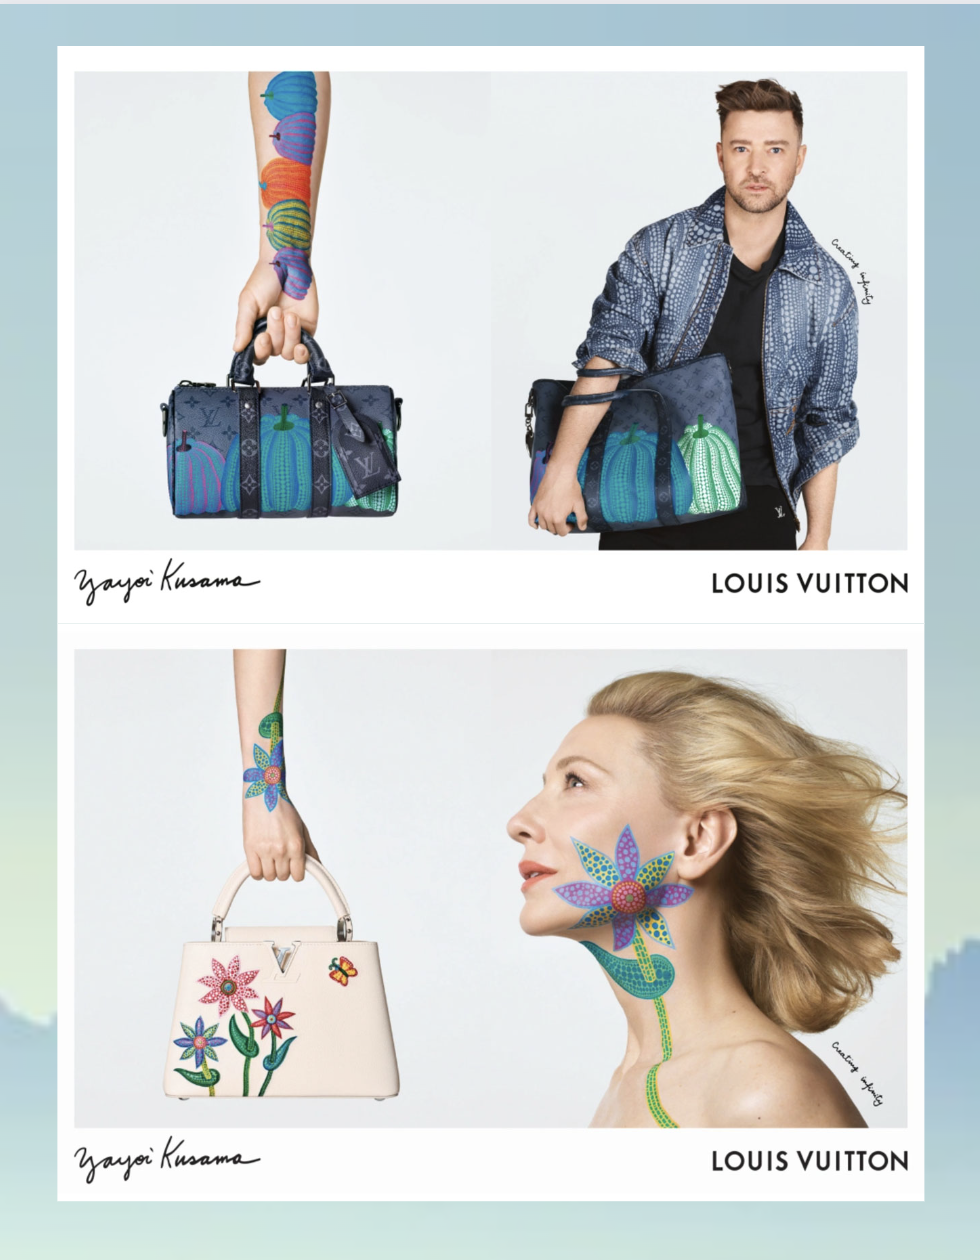 Yayoi Kusama's Signature Spots Return to Louis Vuitton - The New